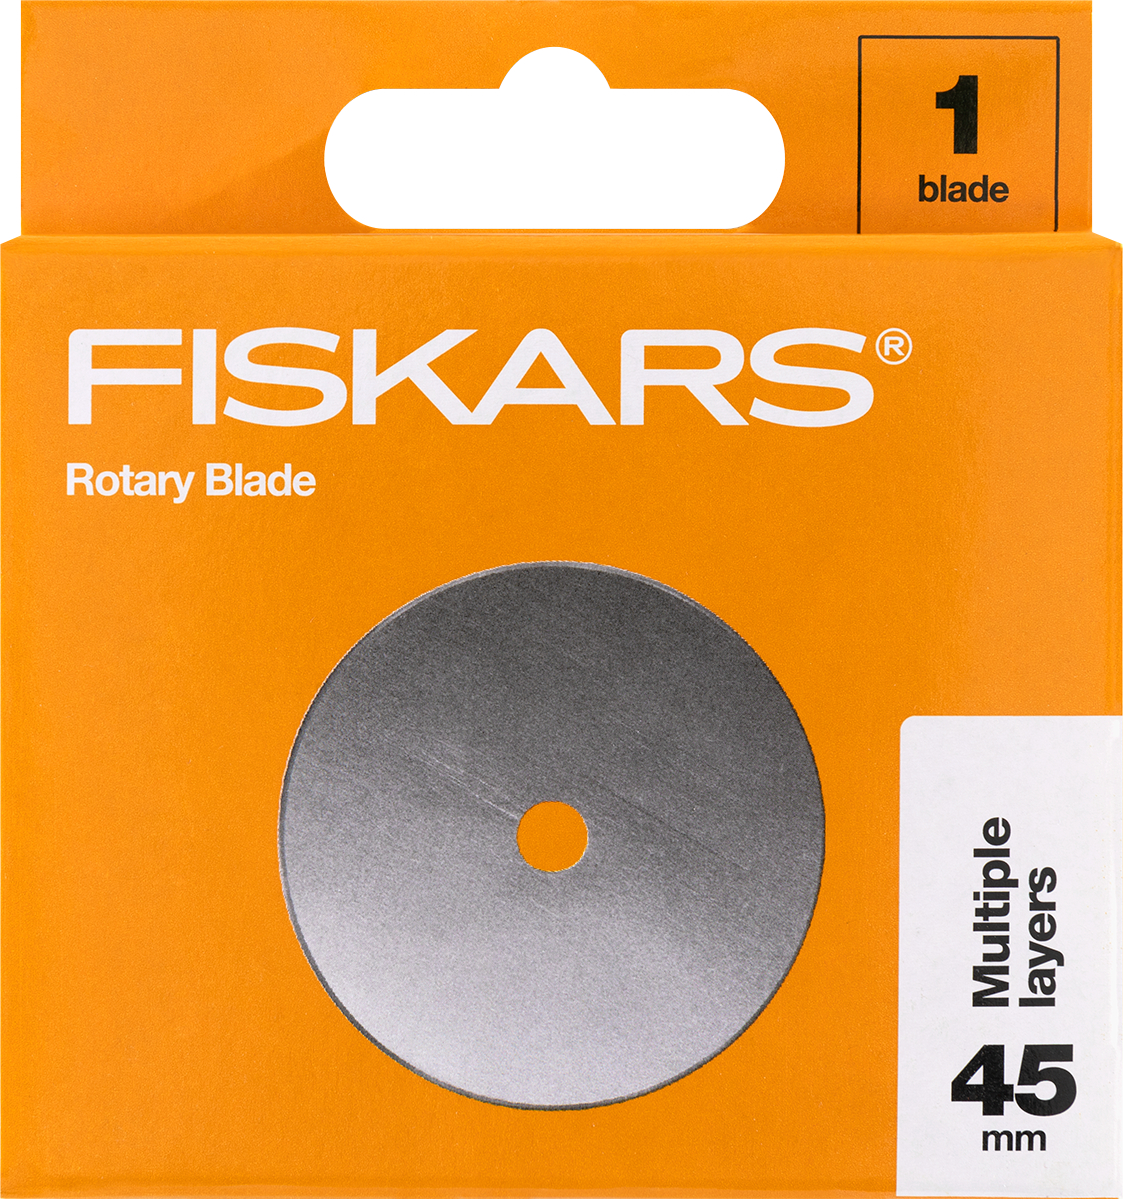 Fiskars 45mm Rotary Blade, 1 Pack 